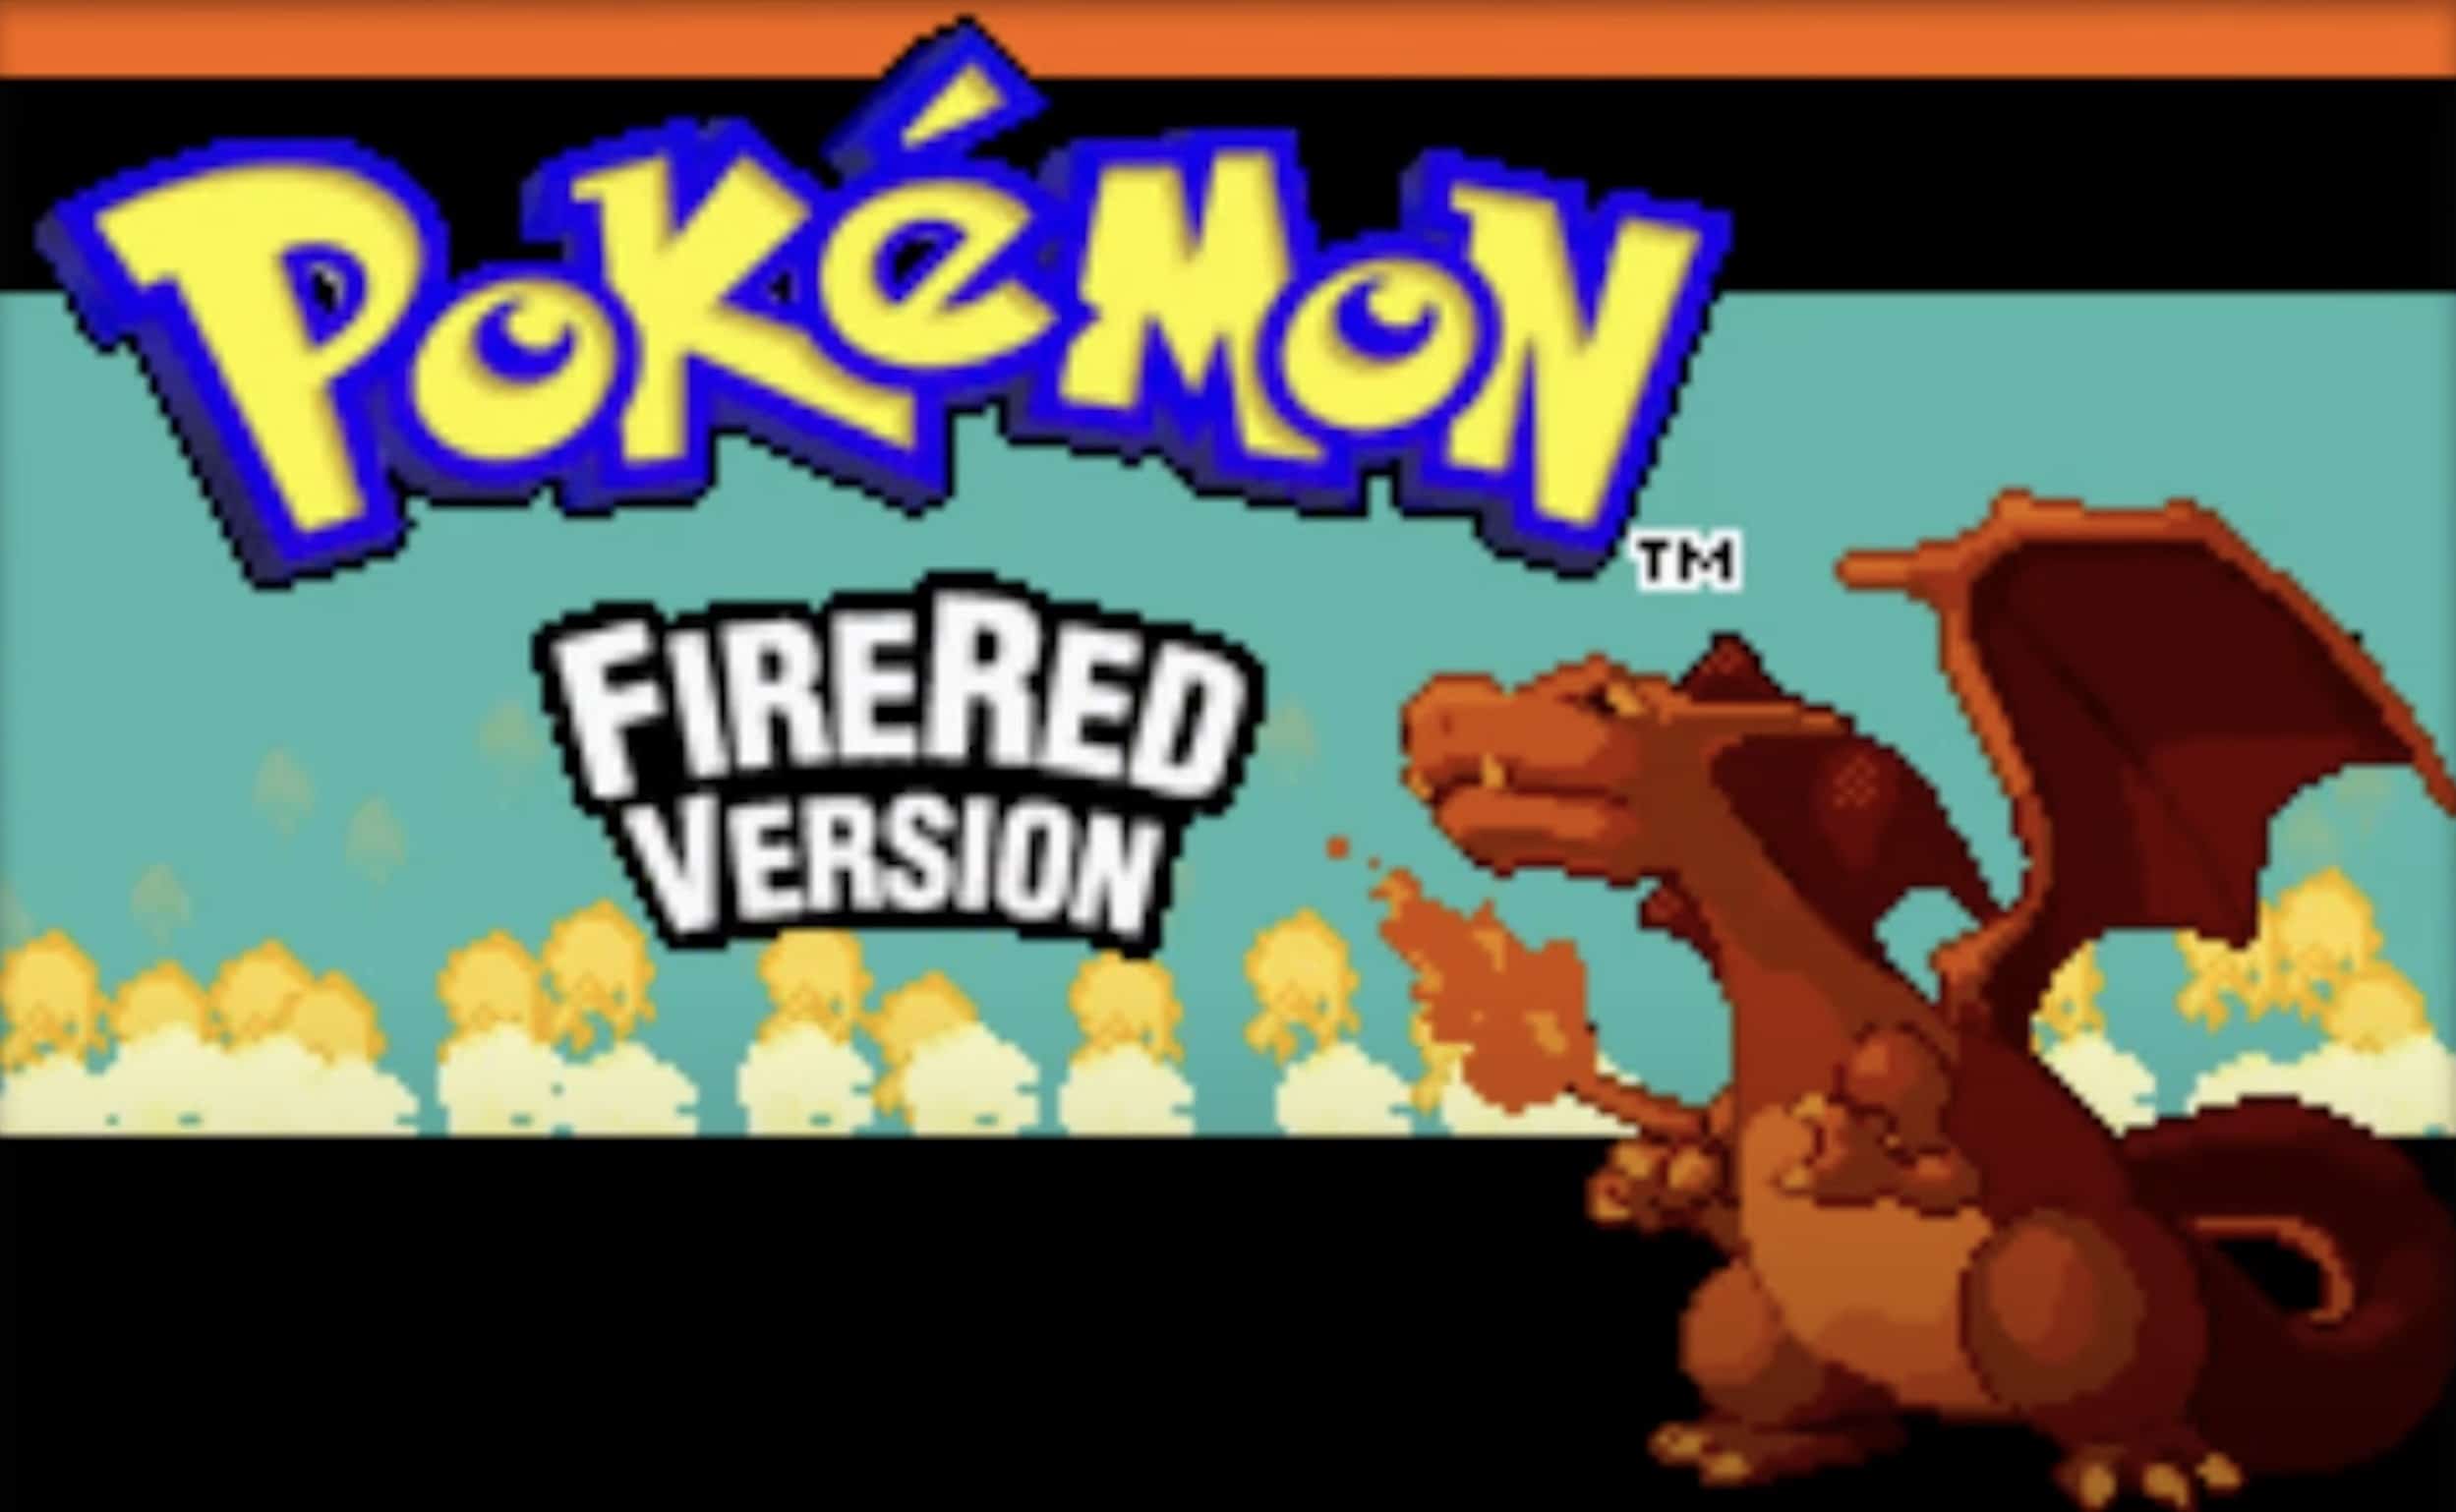 Pokémon Fire Red AMAZING REMAKE! Pokemon Red Adventure Fan Game 